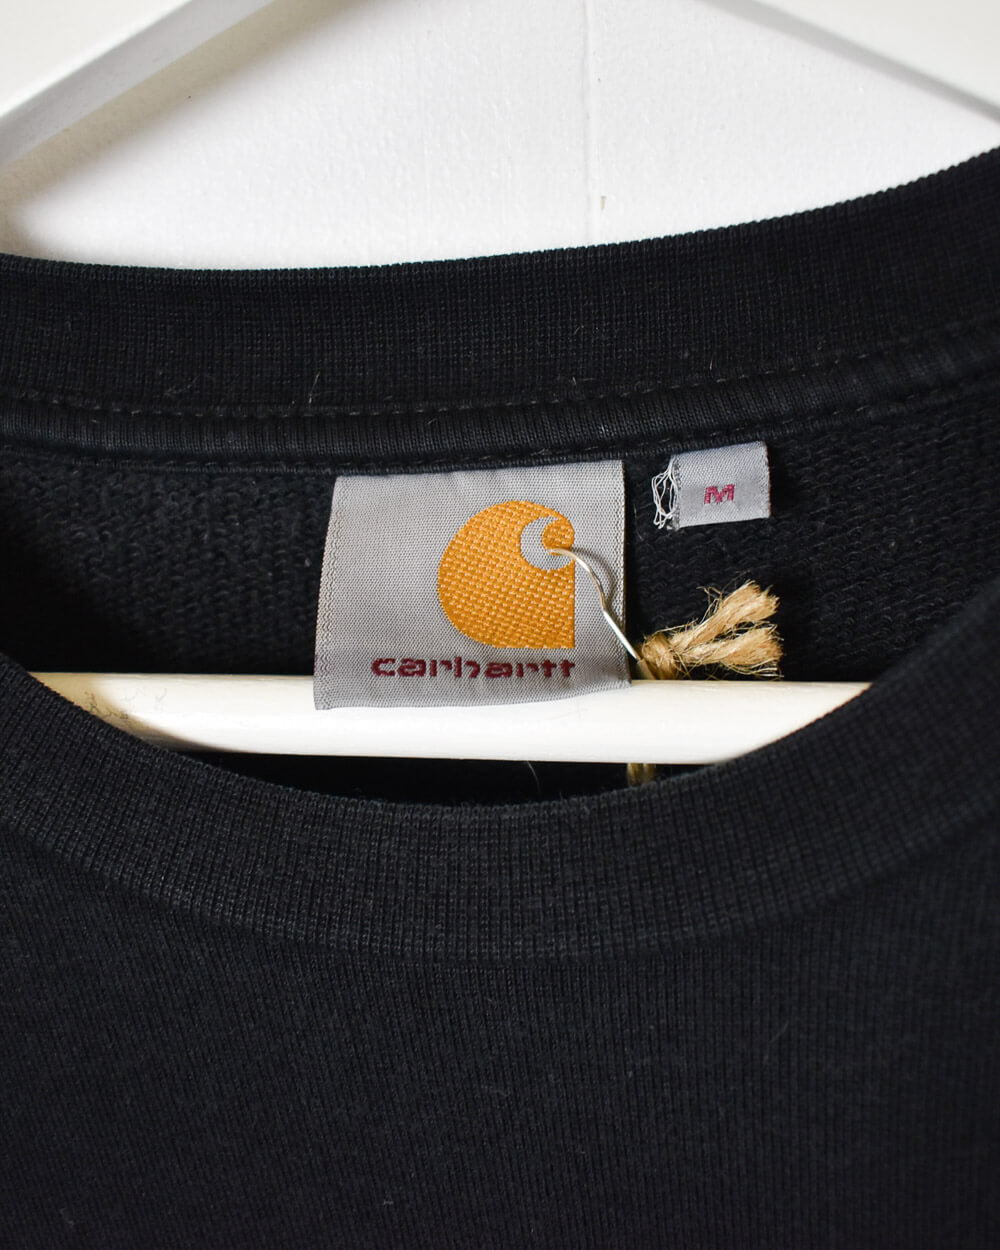 Black Carhartt Sweatshirt - Medium